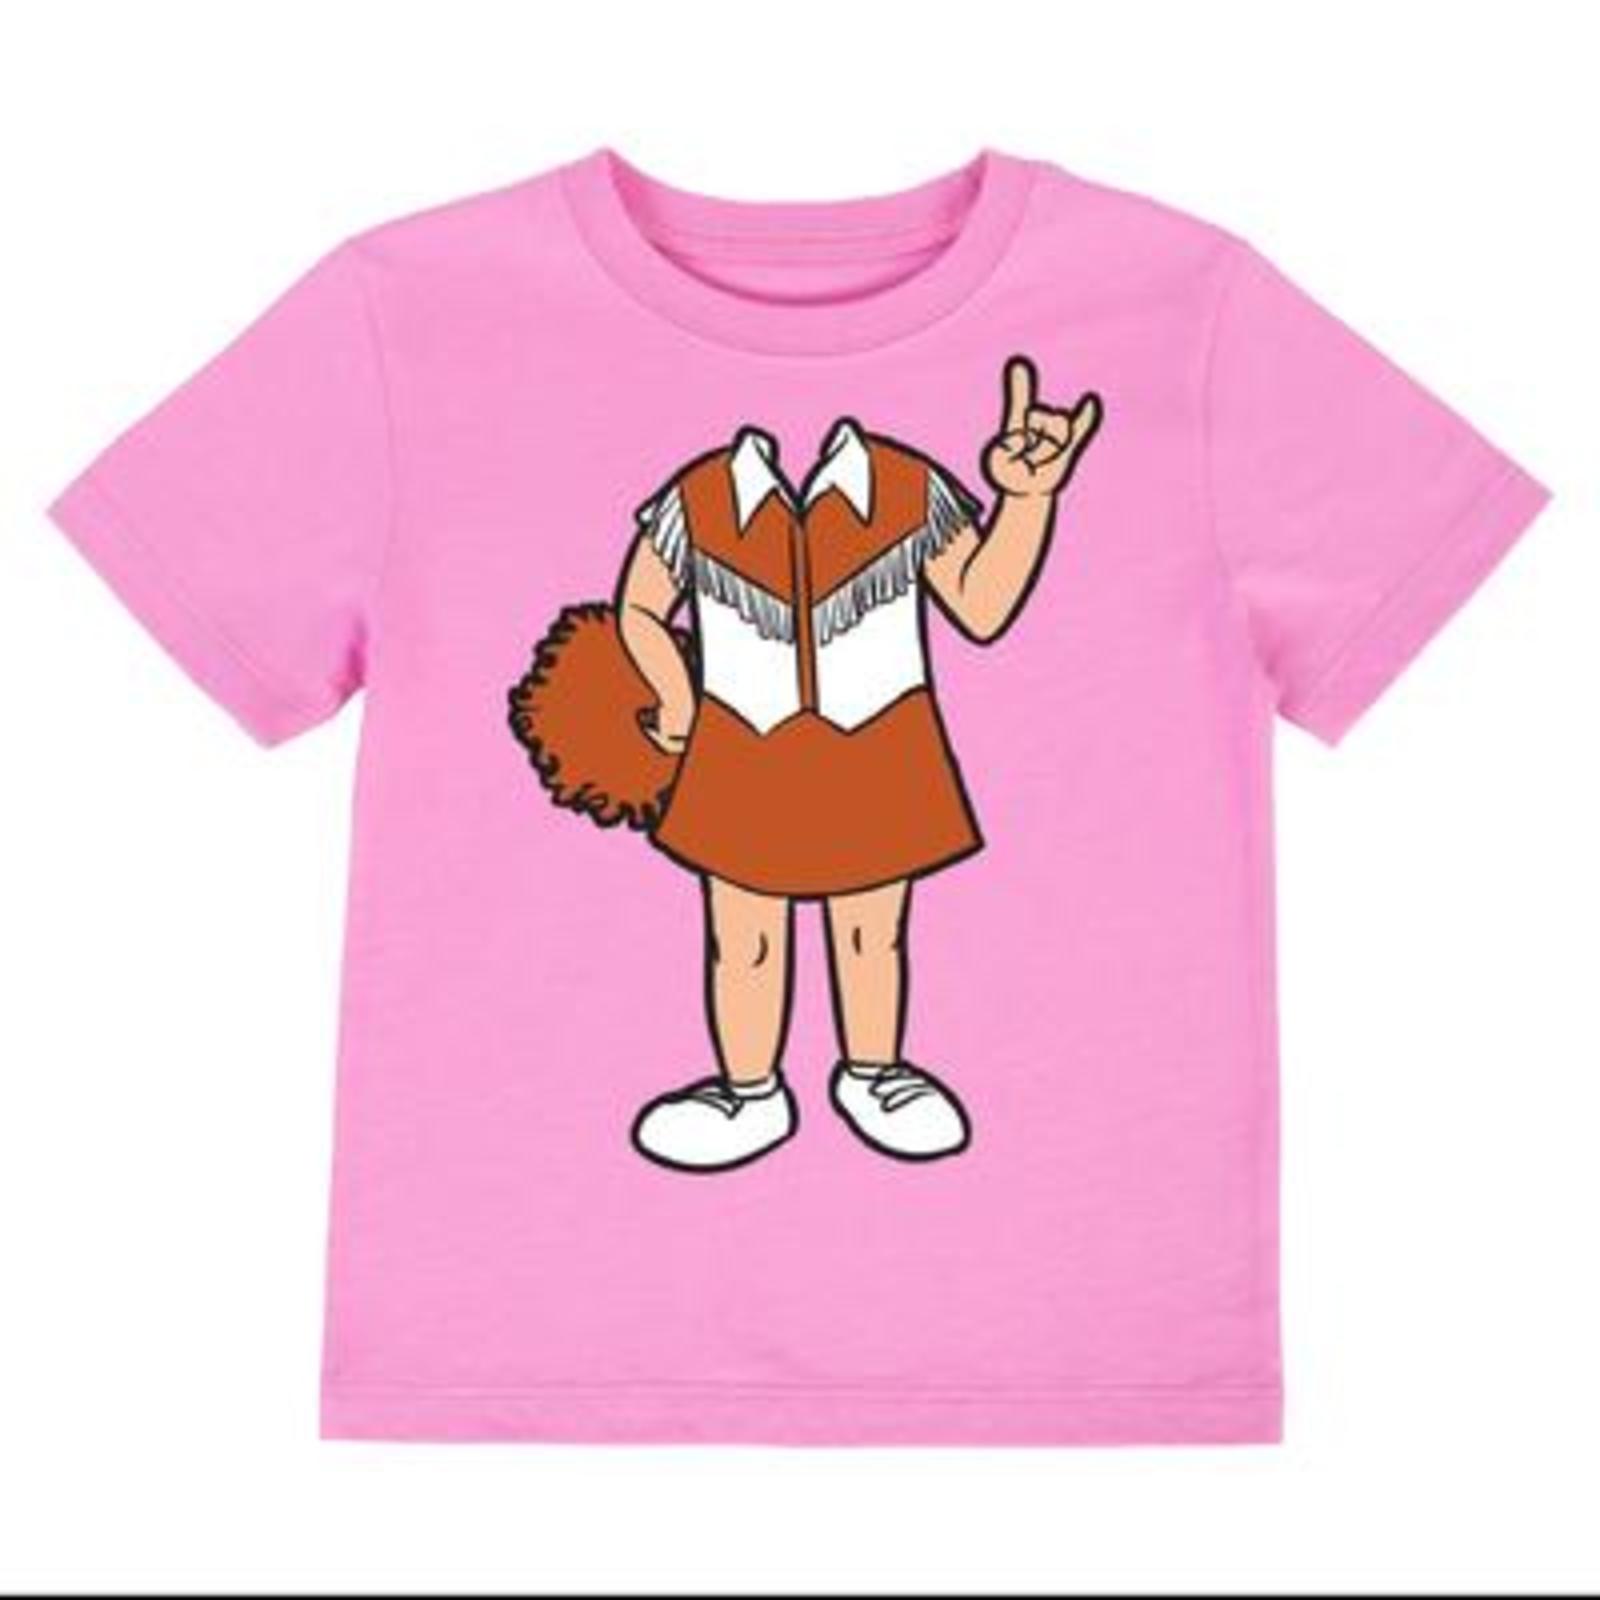 Newborn & Infant Girls' Graphic T-Shirt - Texas Longhorns